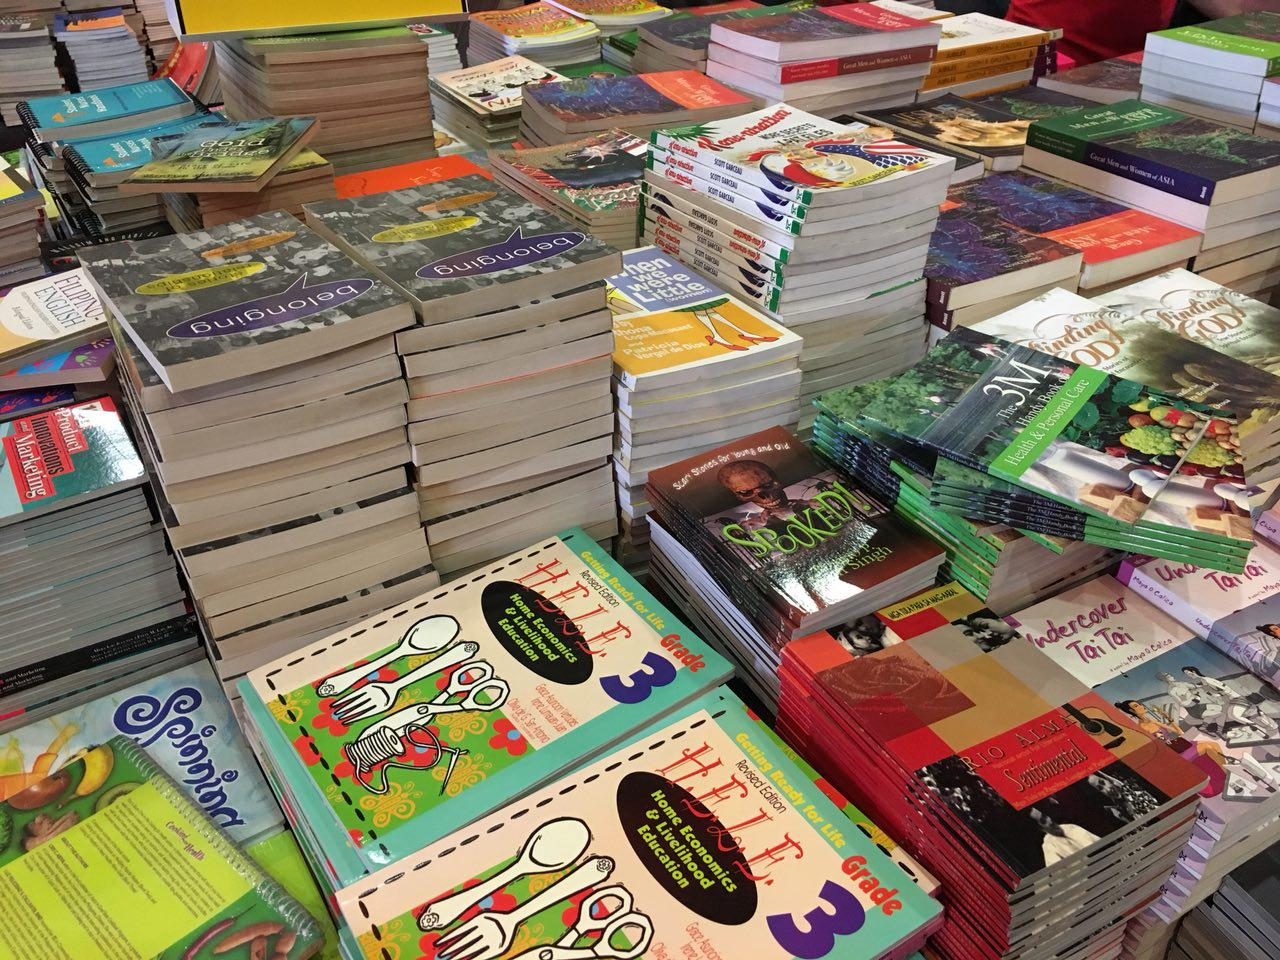 Buyer’s guide: Book Binge Bazaar bargains for every kind of reader